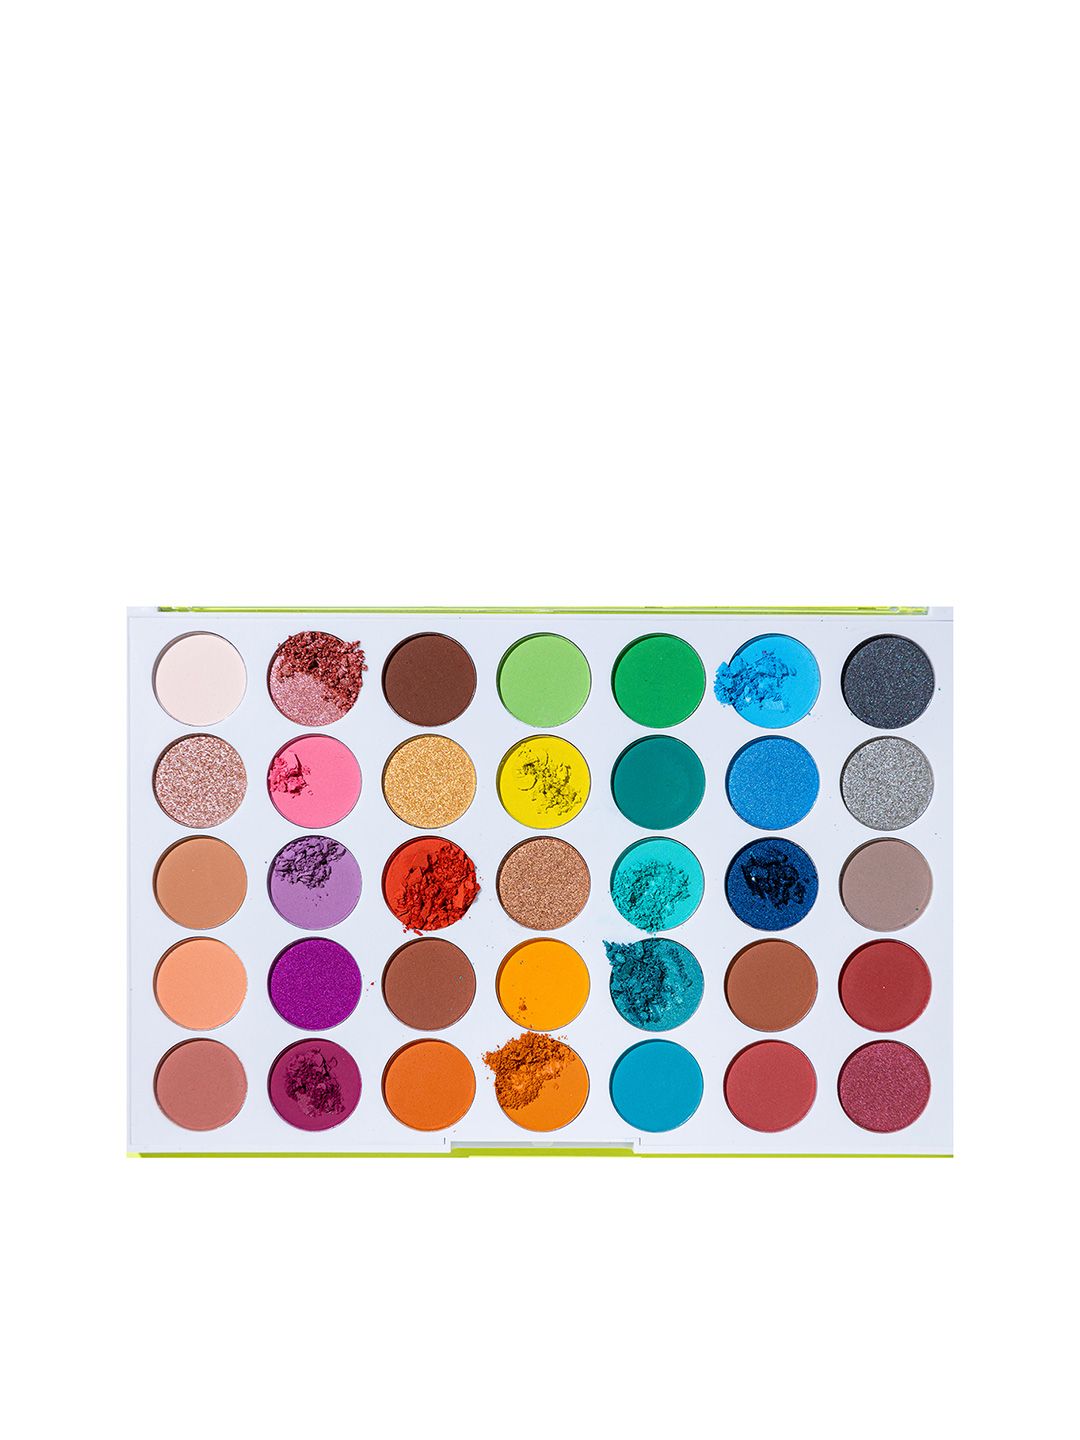 Pigment Play Playground Hero 35 Pan Eye Shadow Palette - Arcoiris Price in India